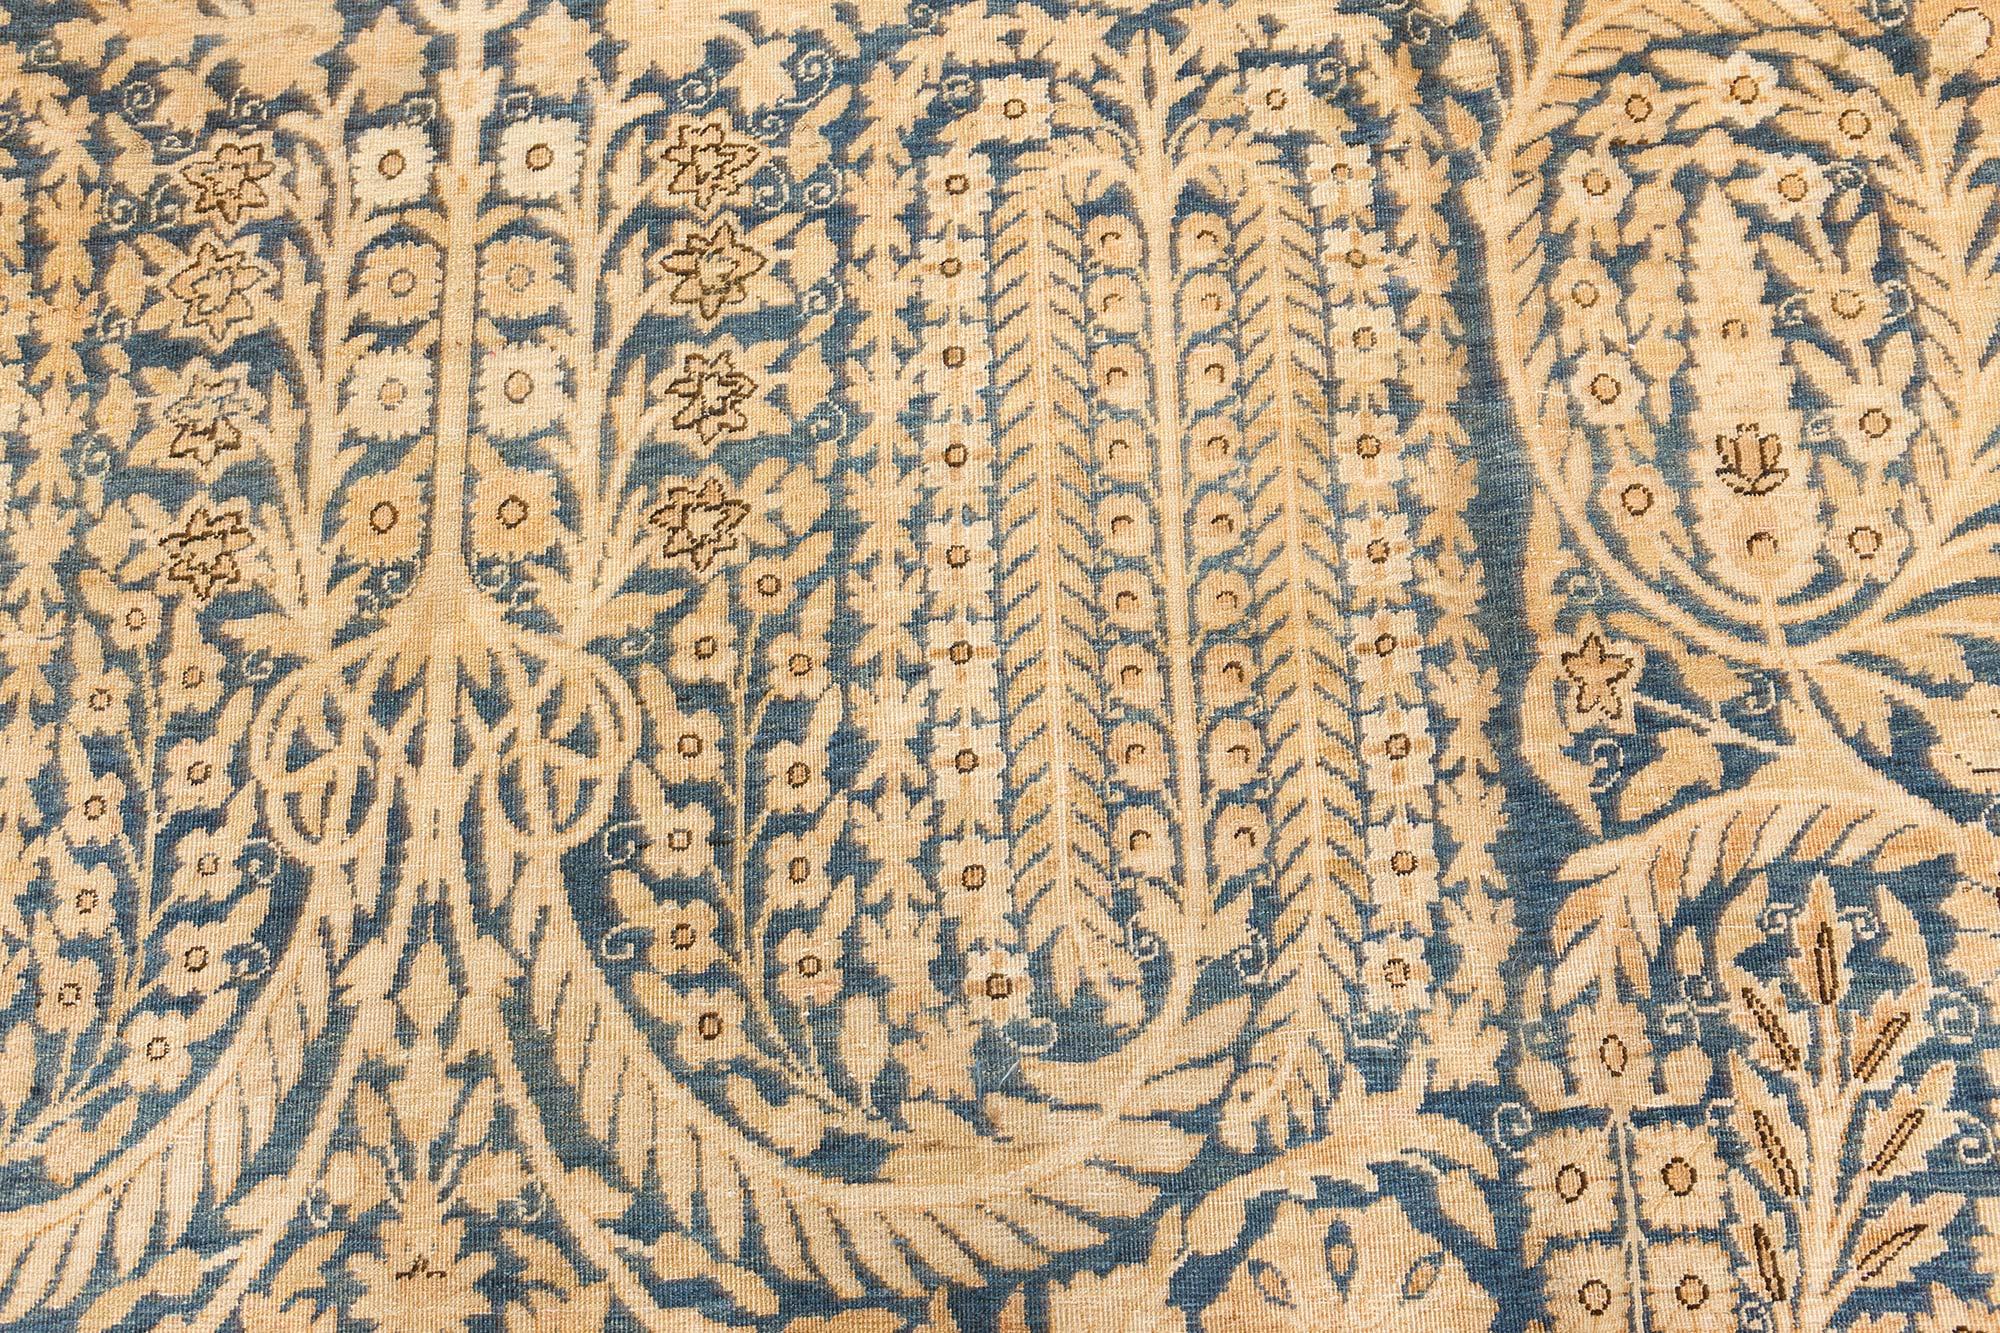 Fine Antique Persian Kirman Blue Handmade Wool Carpet
Size: 10'3